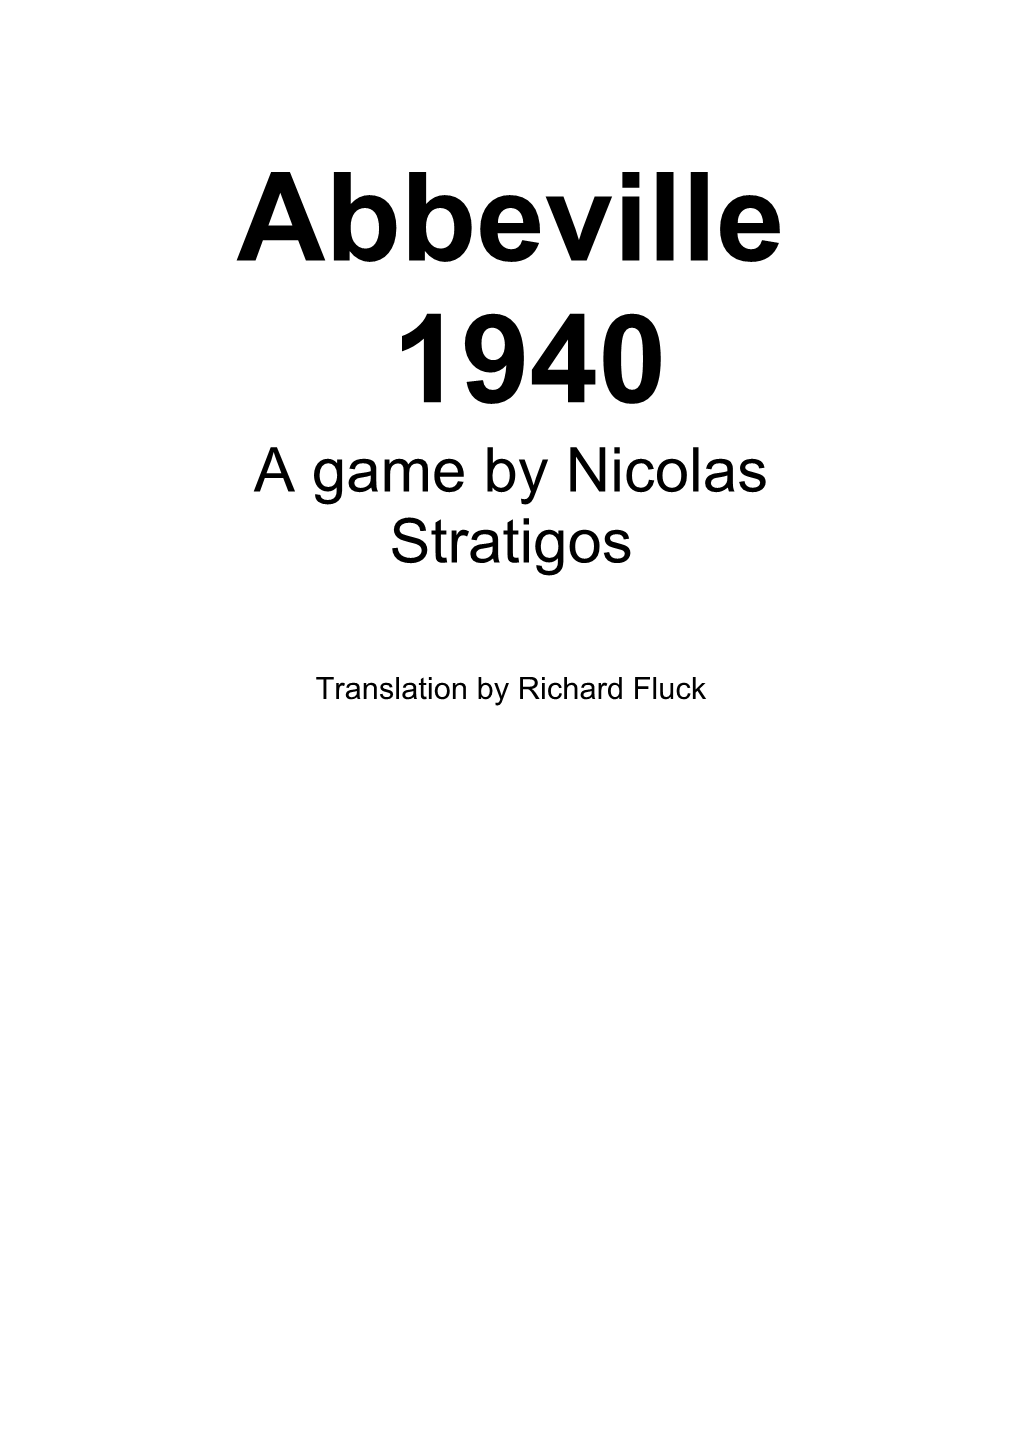 A Game by Nicolas Stratigos